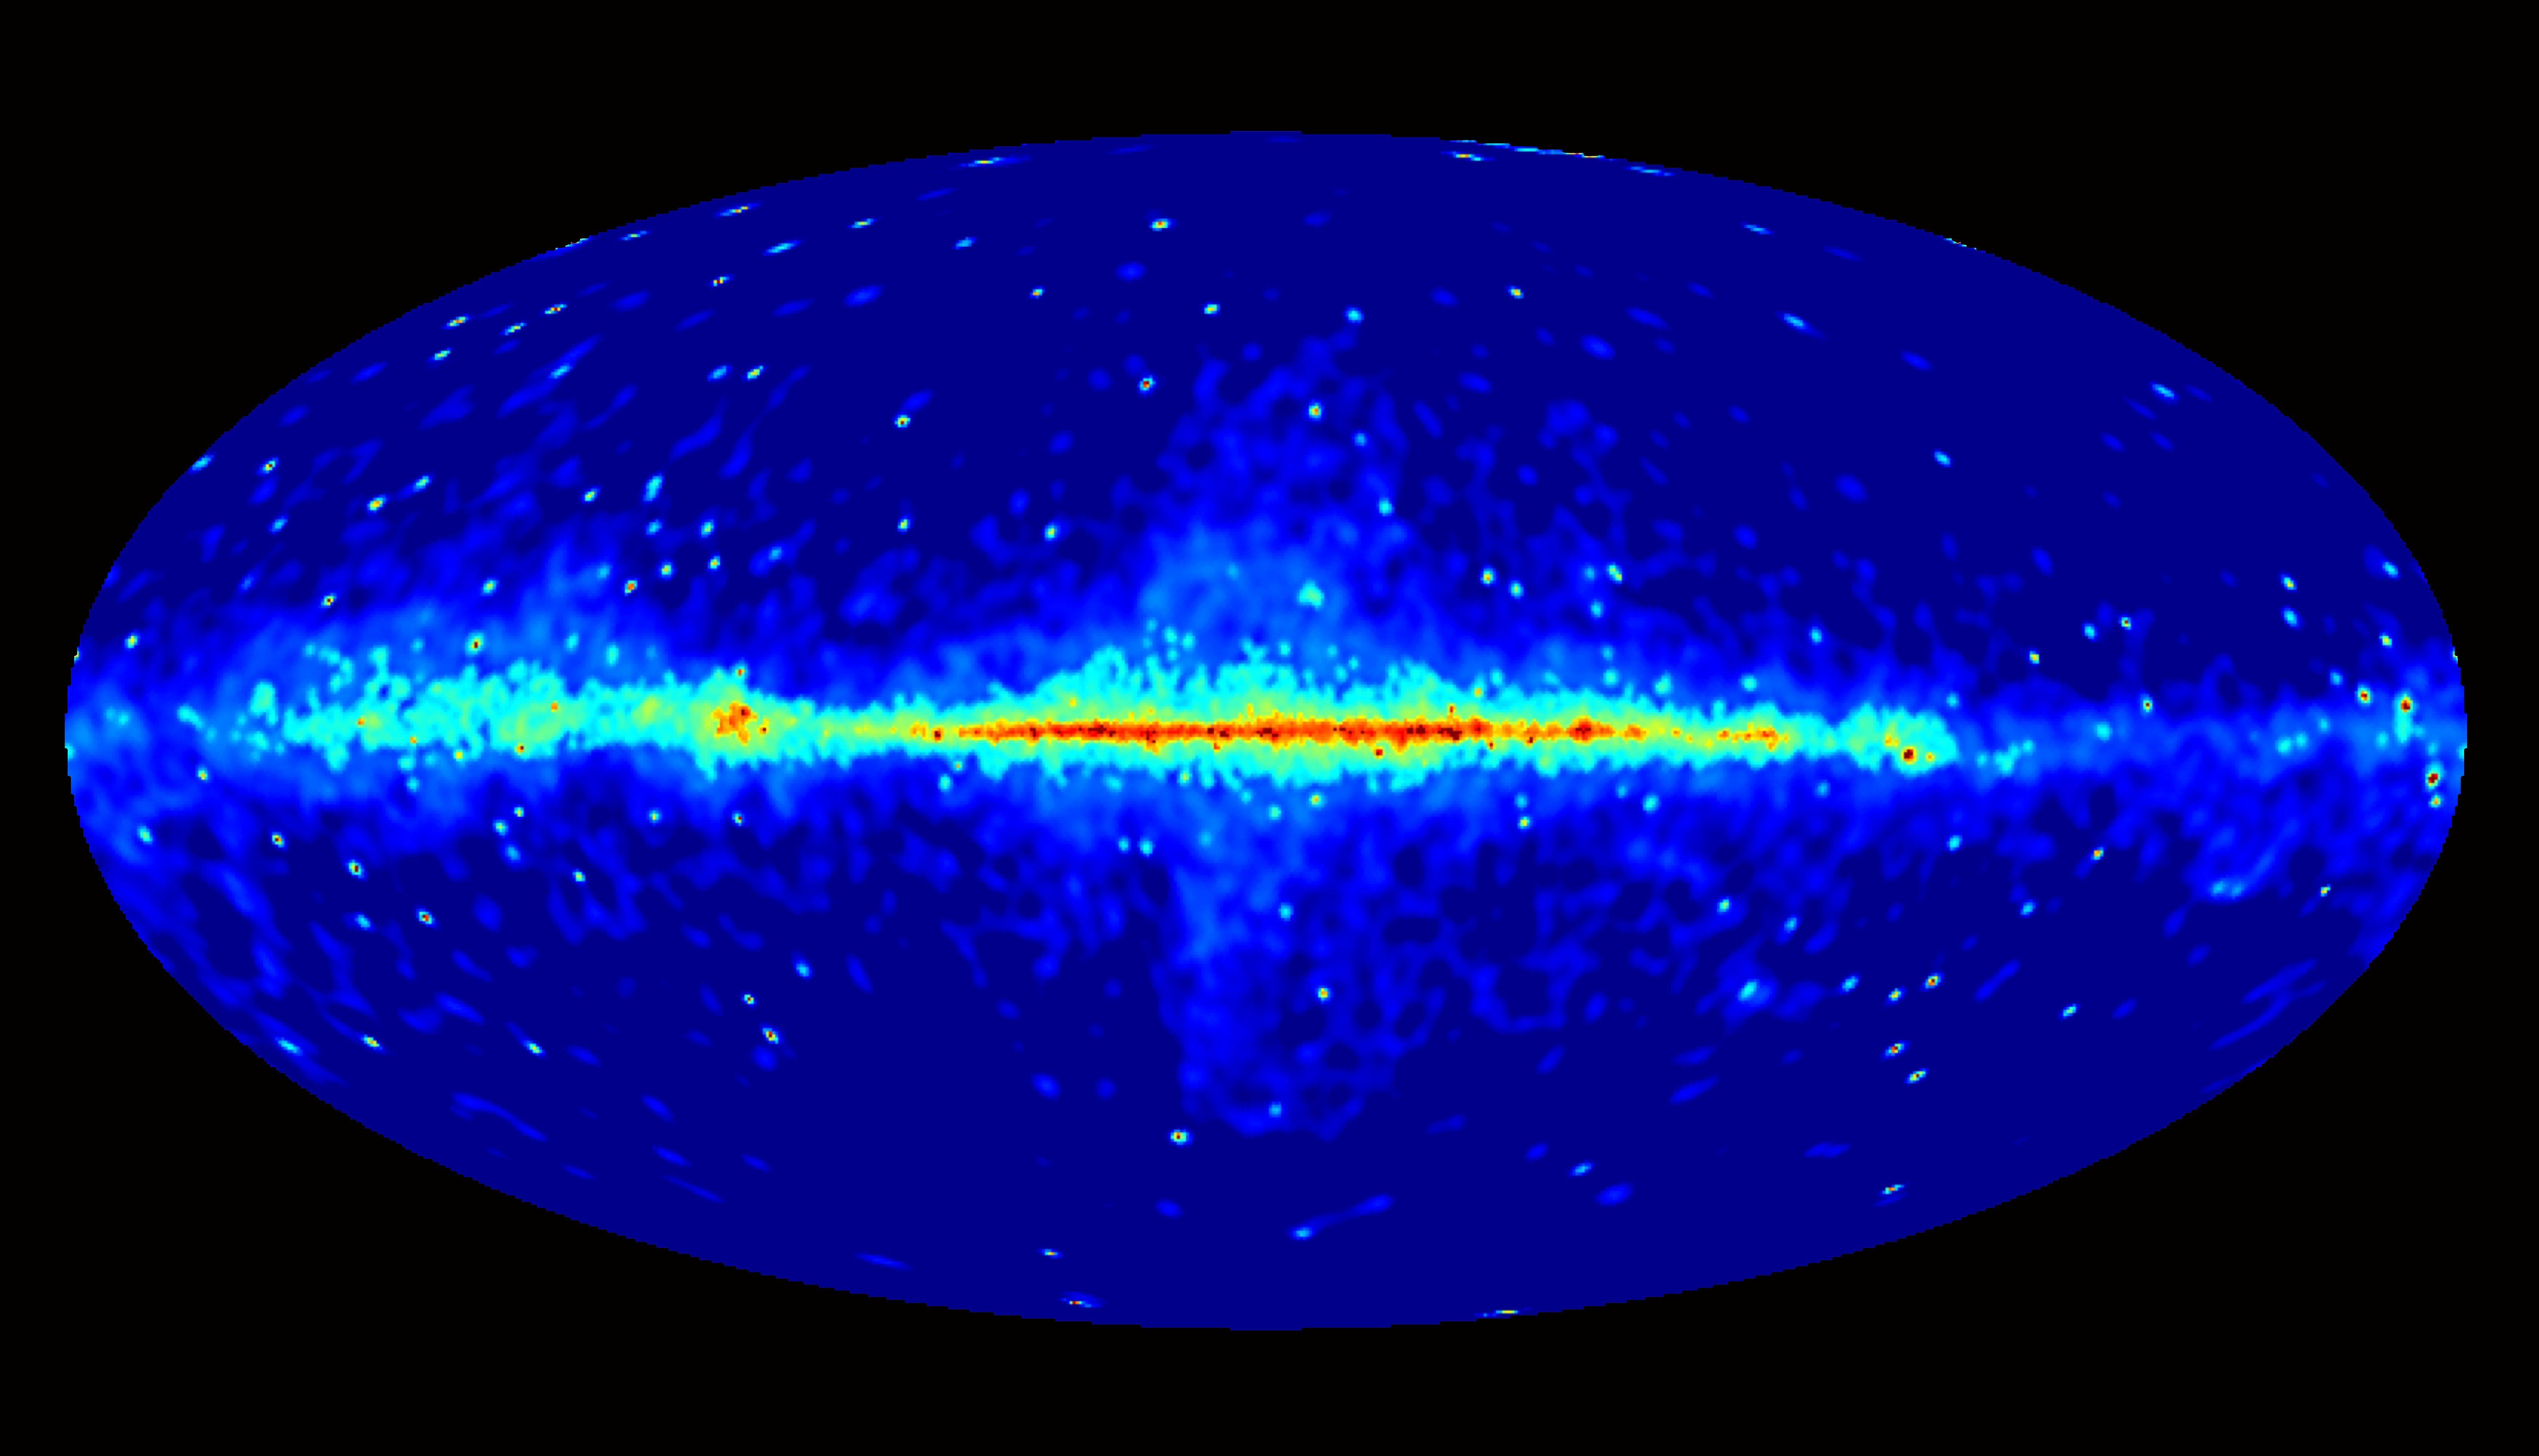 Une carte du rayonnement gamma obtenue par le Fermi Gaama-ray Space Telescope. On y distingue la structure des bulles de Fermi. © Nasa/DOE/Fermi LAT Collaboration